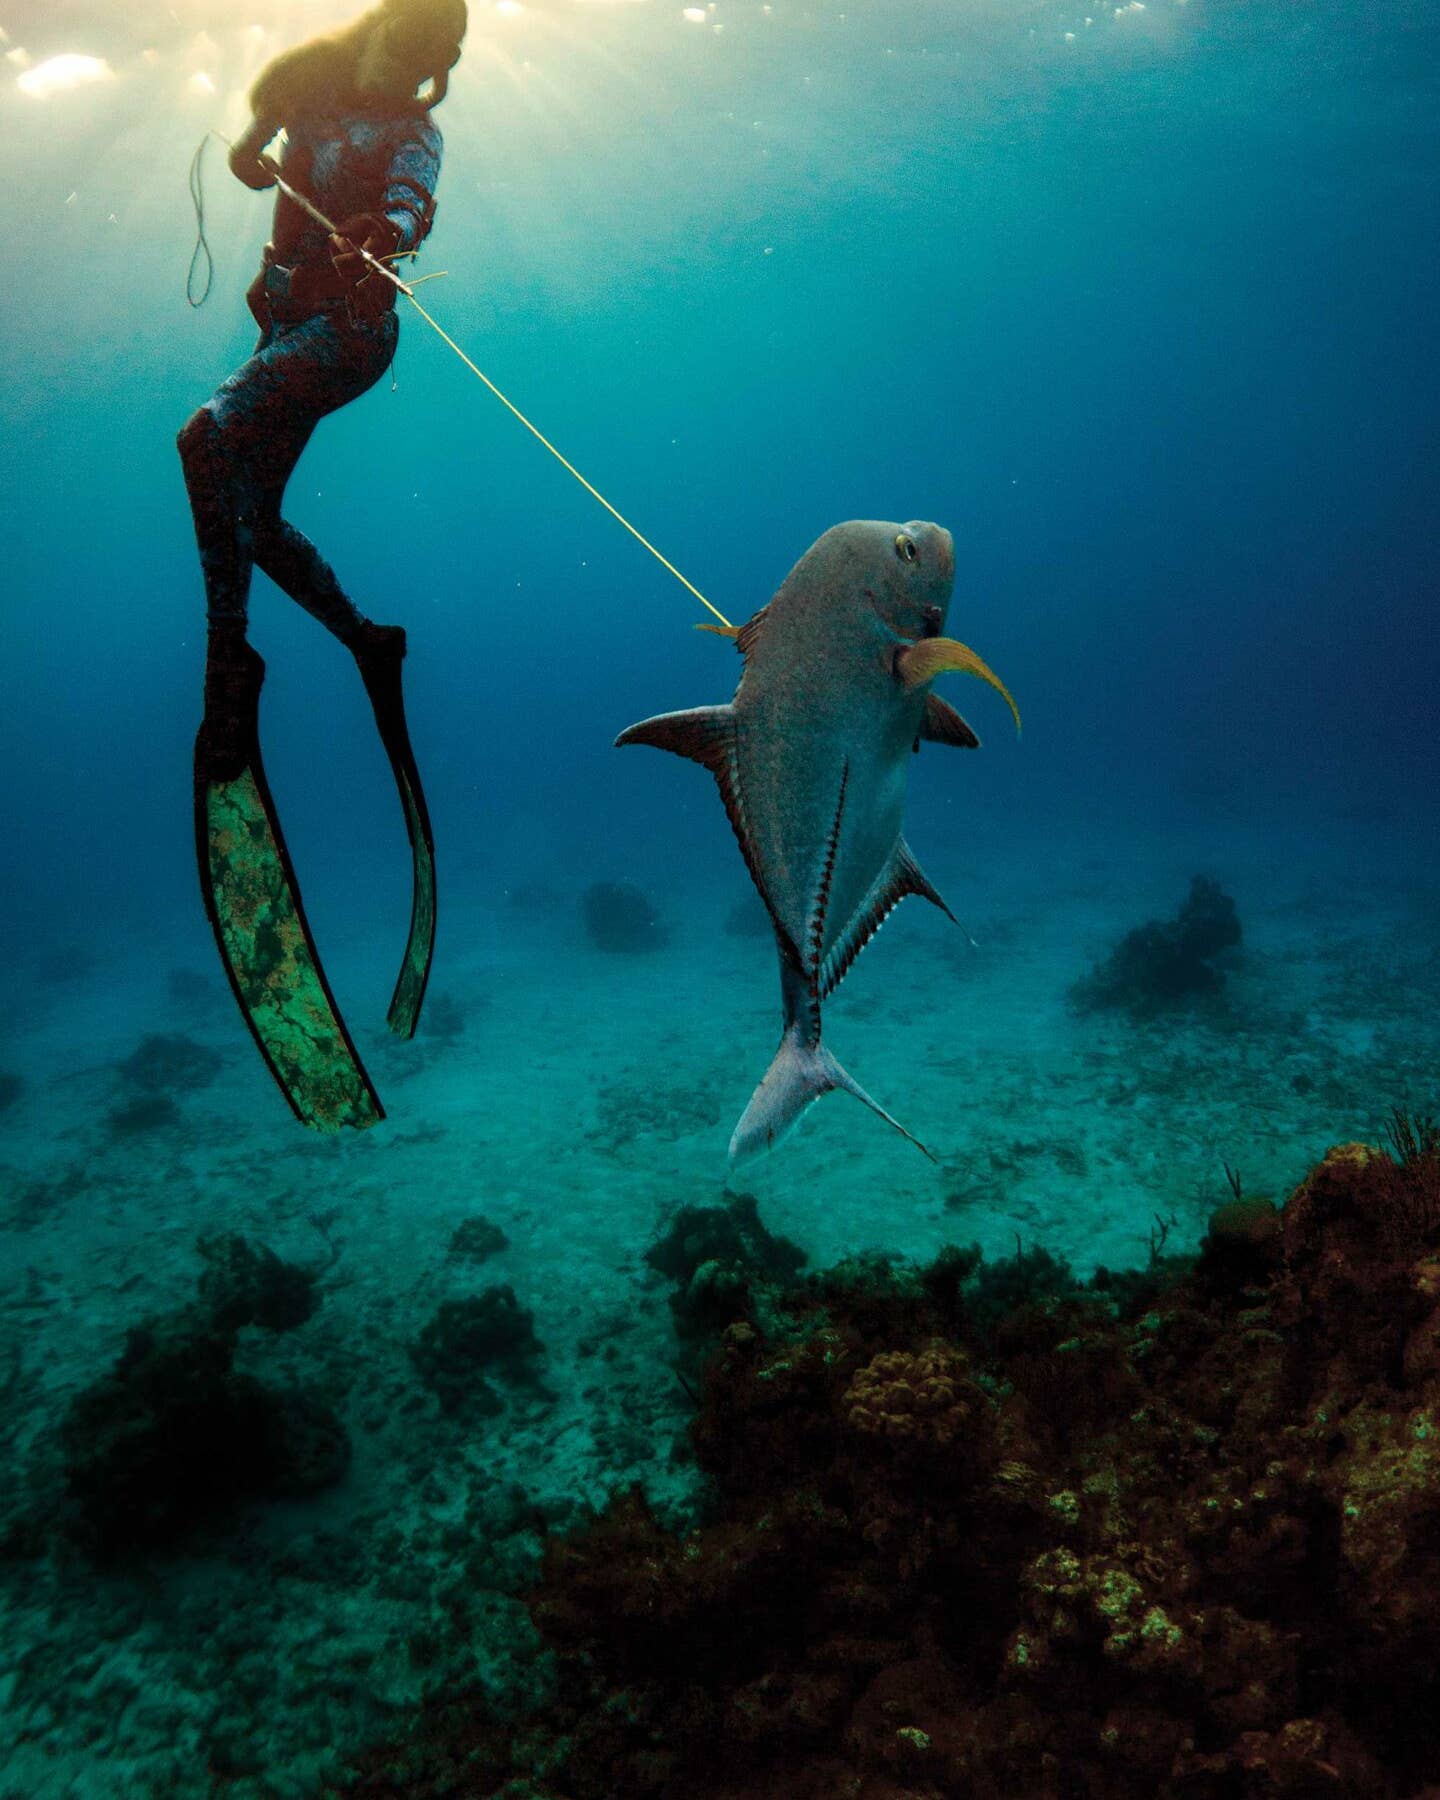 This Award-Winning Spearfisher Catches Dinner 75 Feet Under Water